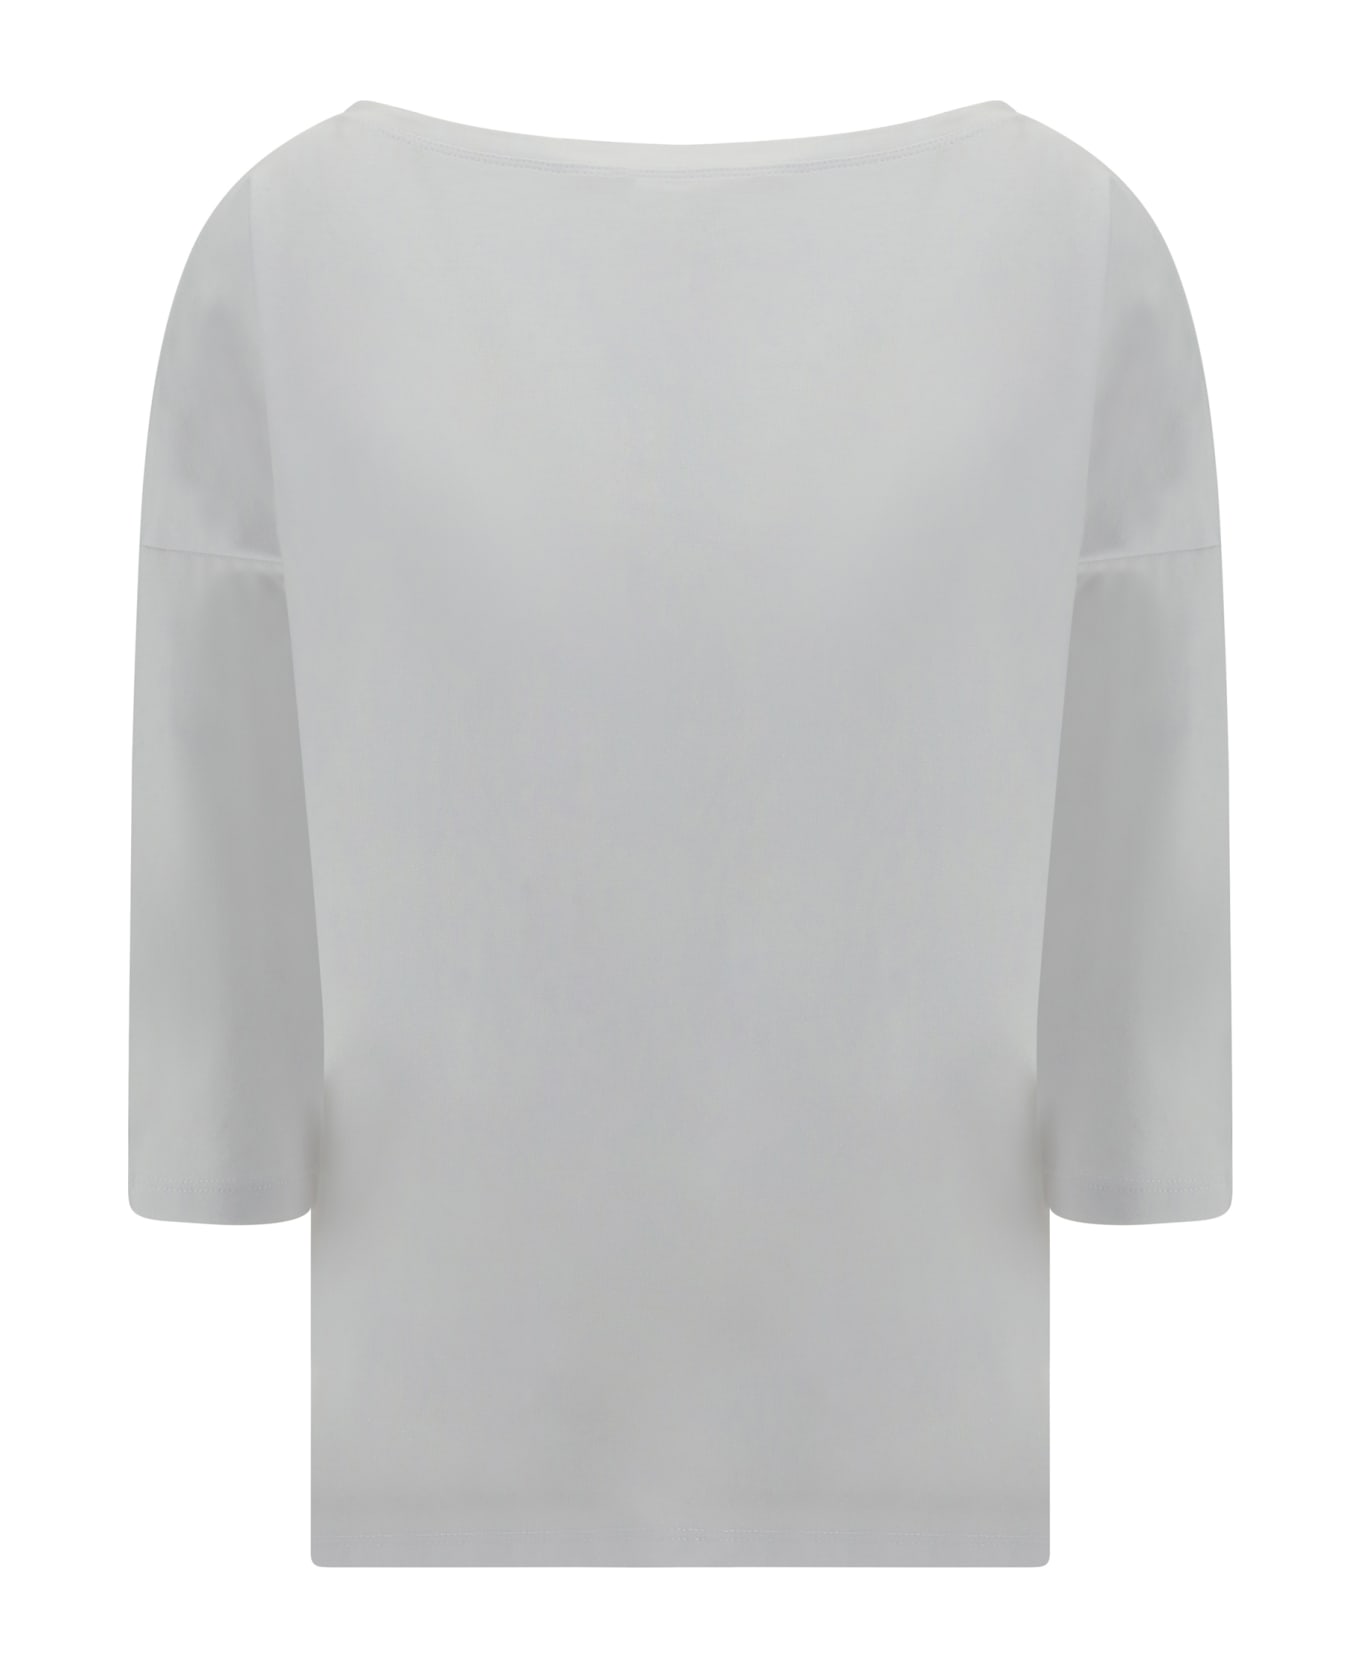 Wild Cashmere T-shirt - Off-white 001 Tシャツ